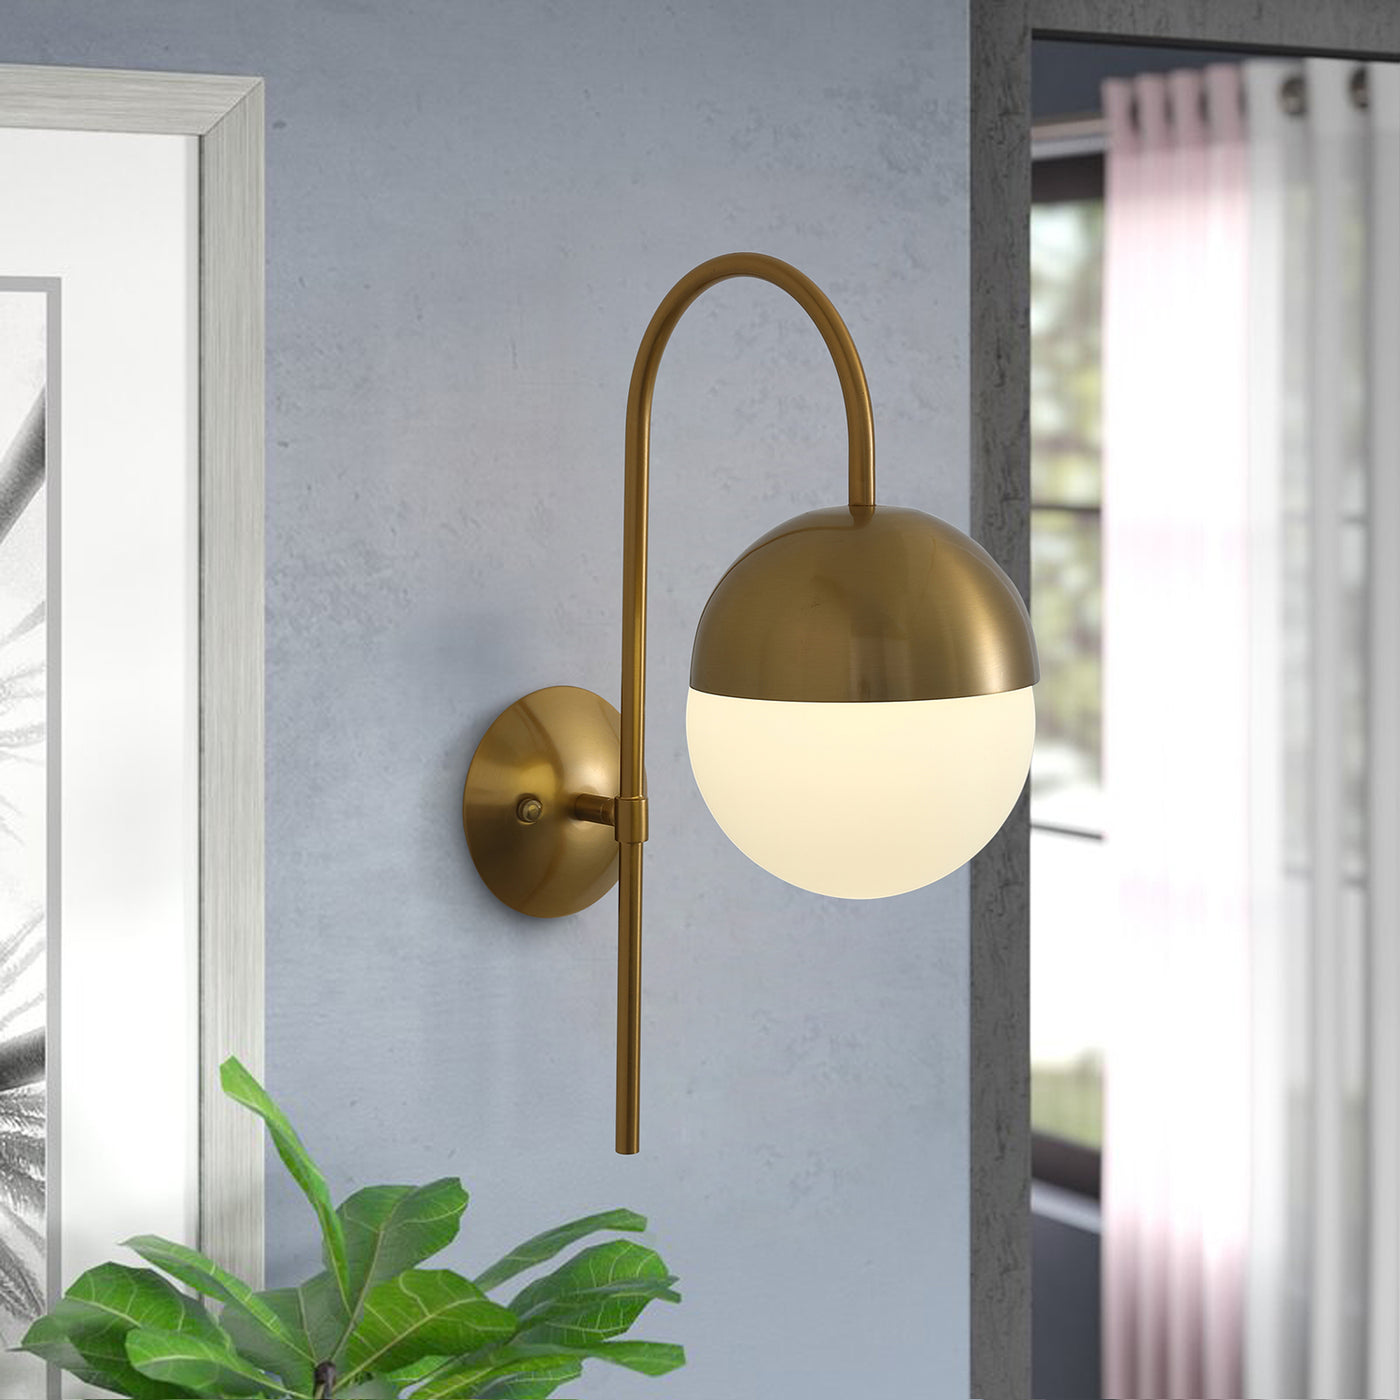 1-Light Oval Glass Shade Wall Lamp